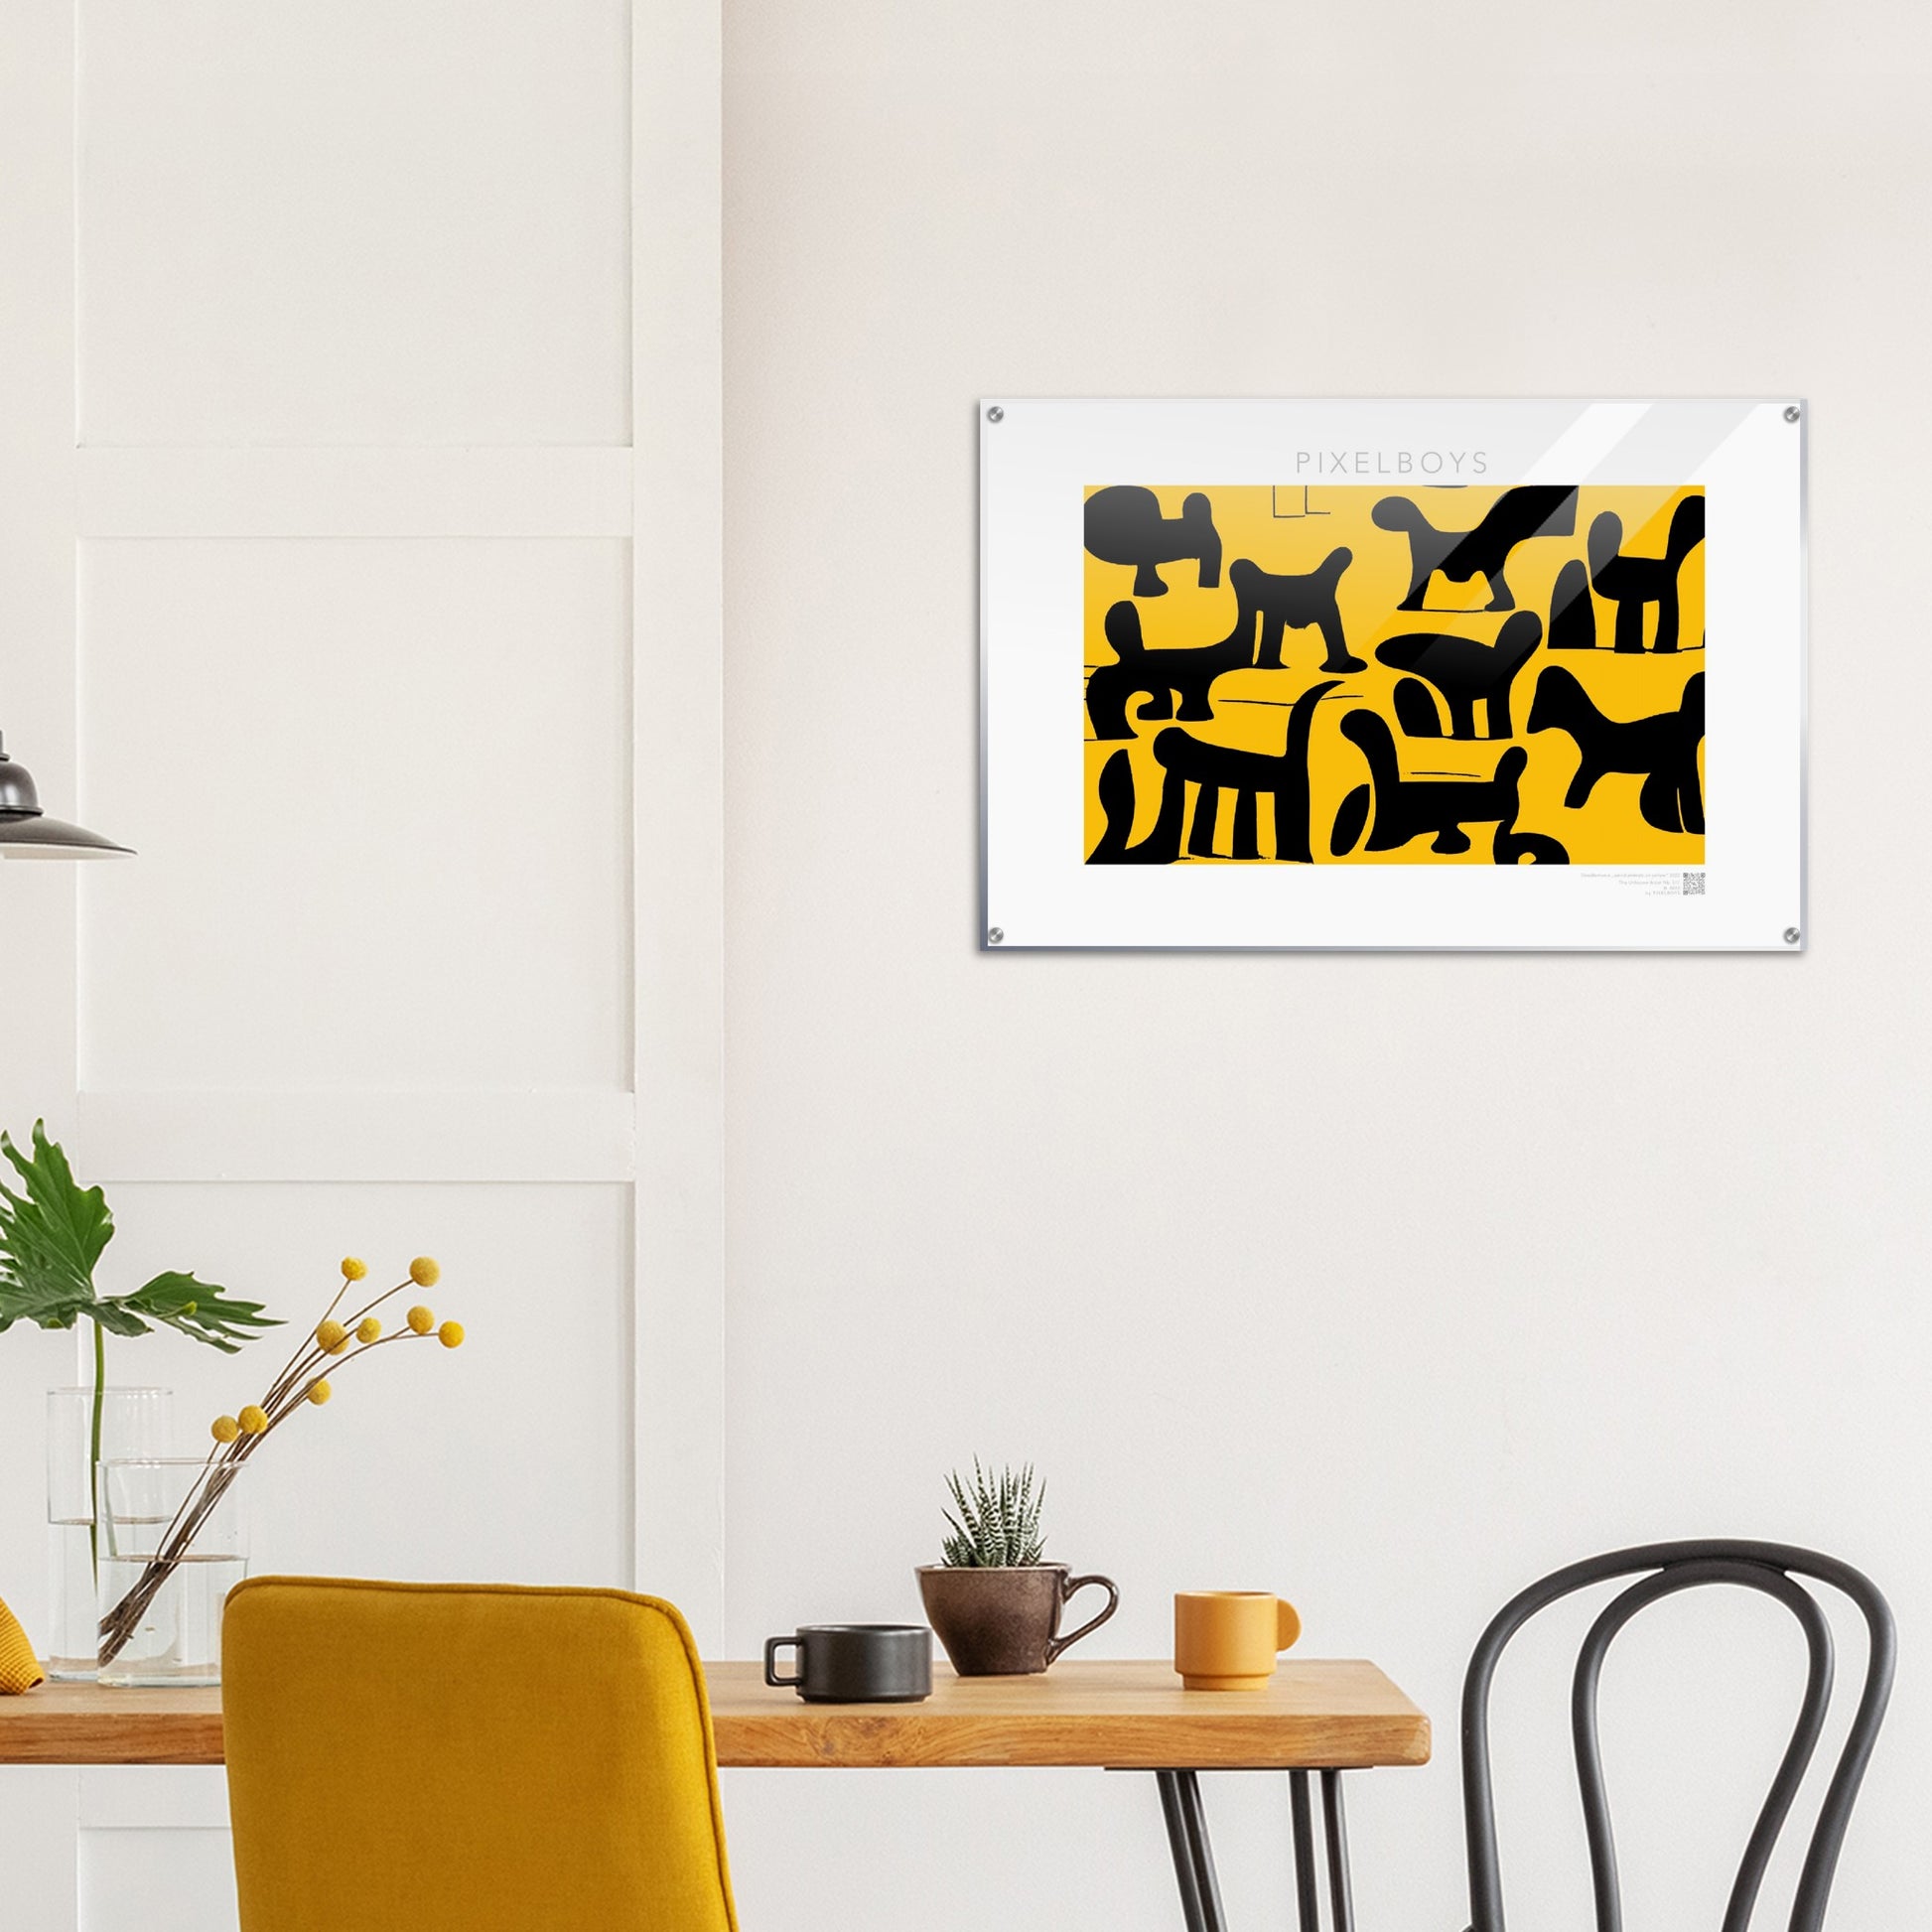 Acrylbild - Doodlemania "weird animals on yellow" - No.3 - bedruckte Tasse-  gelb - Cup - Hunde - Katzen - Doodle Kunst - dogs - Cats - gastro - Poster mit Rahmen - doodle artwork - Acrylbild - Kunstdruck - Wandbild - office Poster - Poster with frame -  Künstler: Pixelboys & The Unknown Artist Nb.517 - keith haring - Gastro Art - anti stress art - Art Brand - Kunstdruck - Gastro Tasse - 